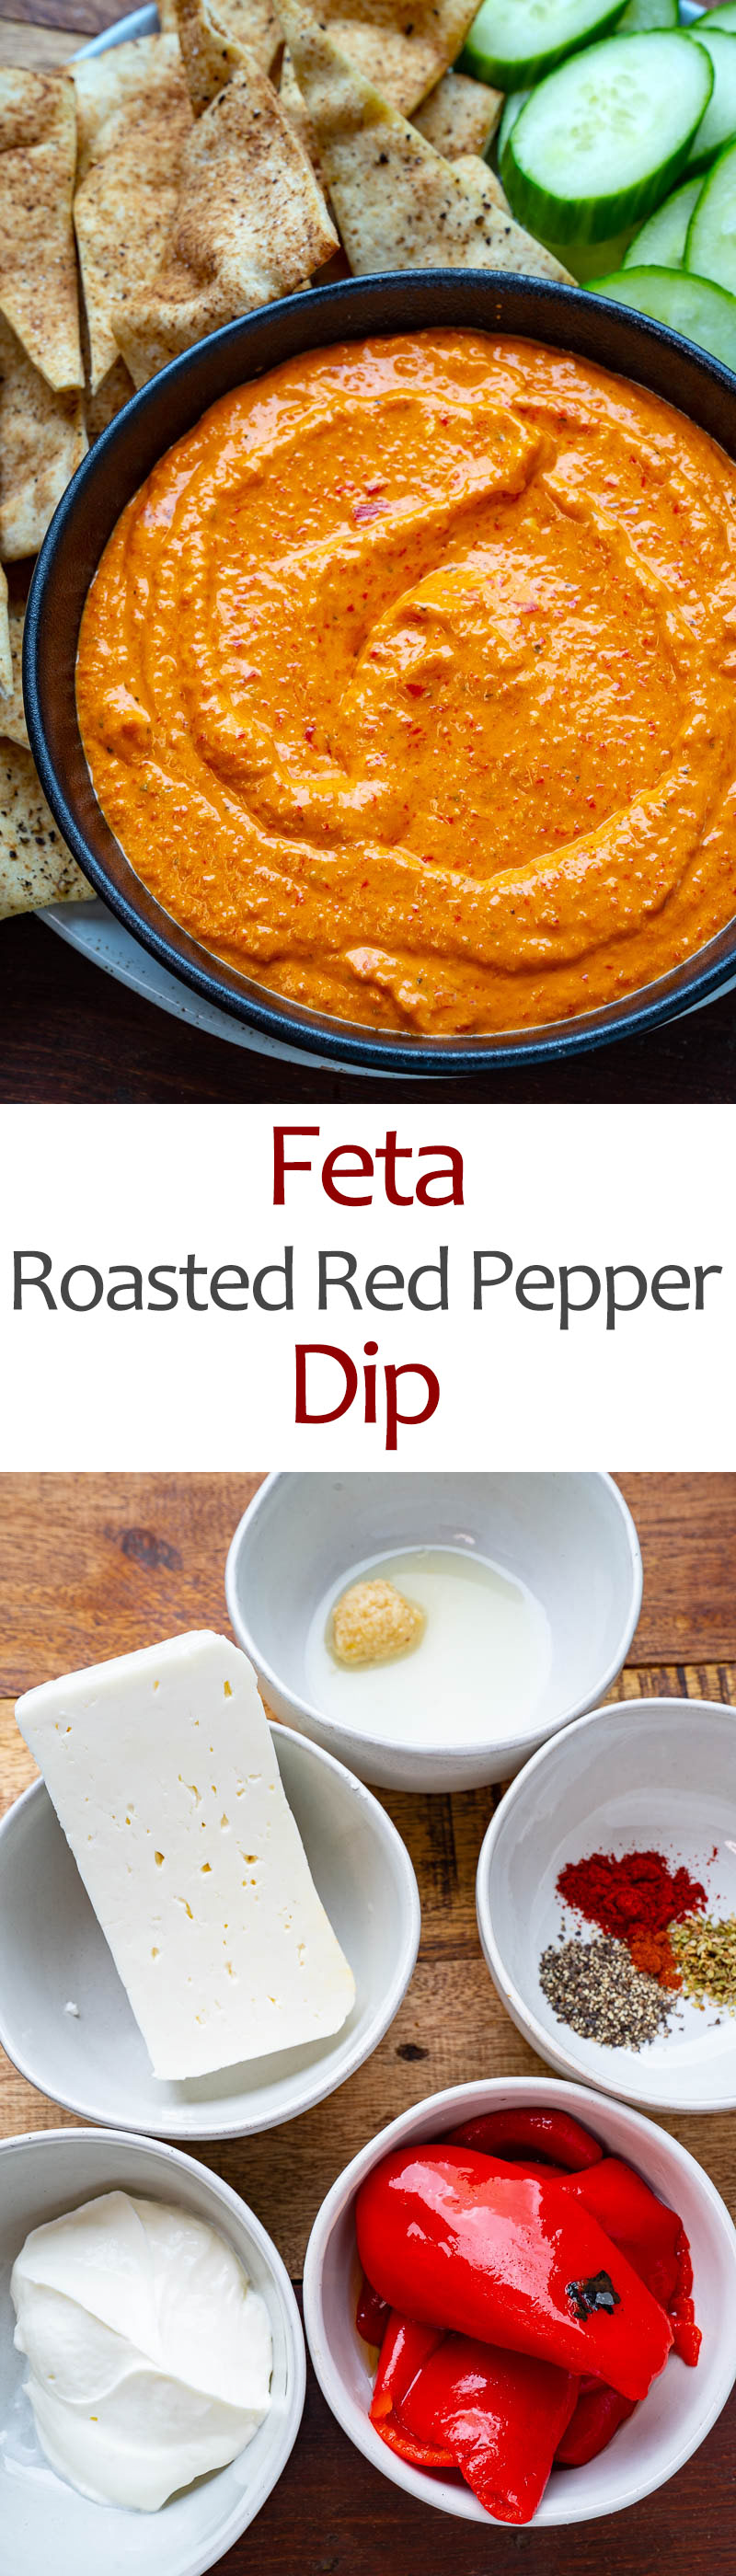 Feta and Roasted Red Pepper Dip (Htipiti)